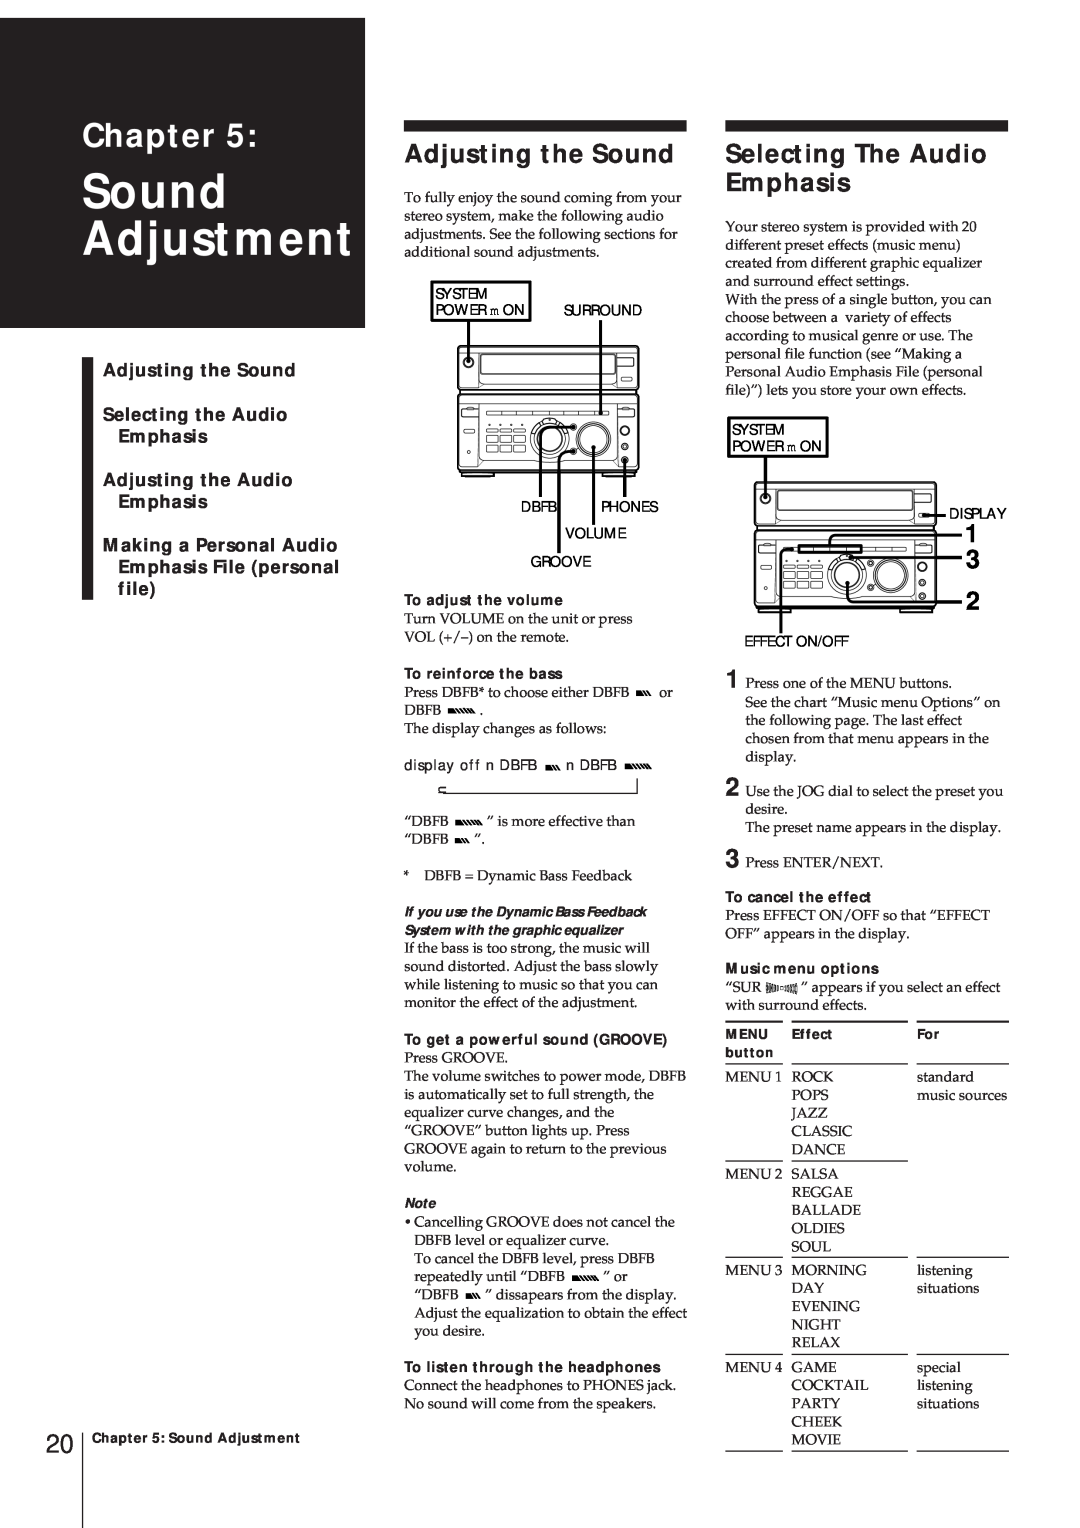 Sony MHC-W55 Sound Adjustment, Chapter, Adjusting the Sound Selecting the Audio Emphasis, Adjusting the Audio Emphasis 